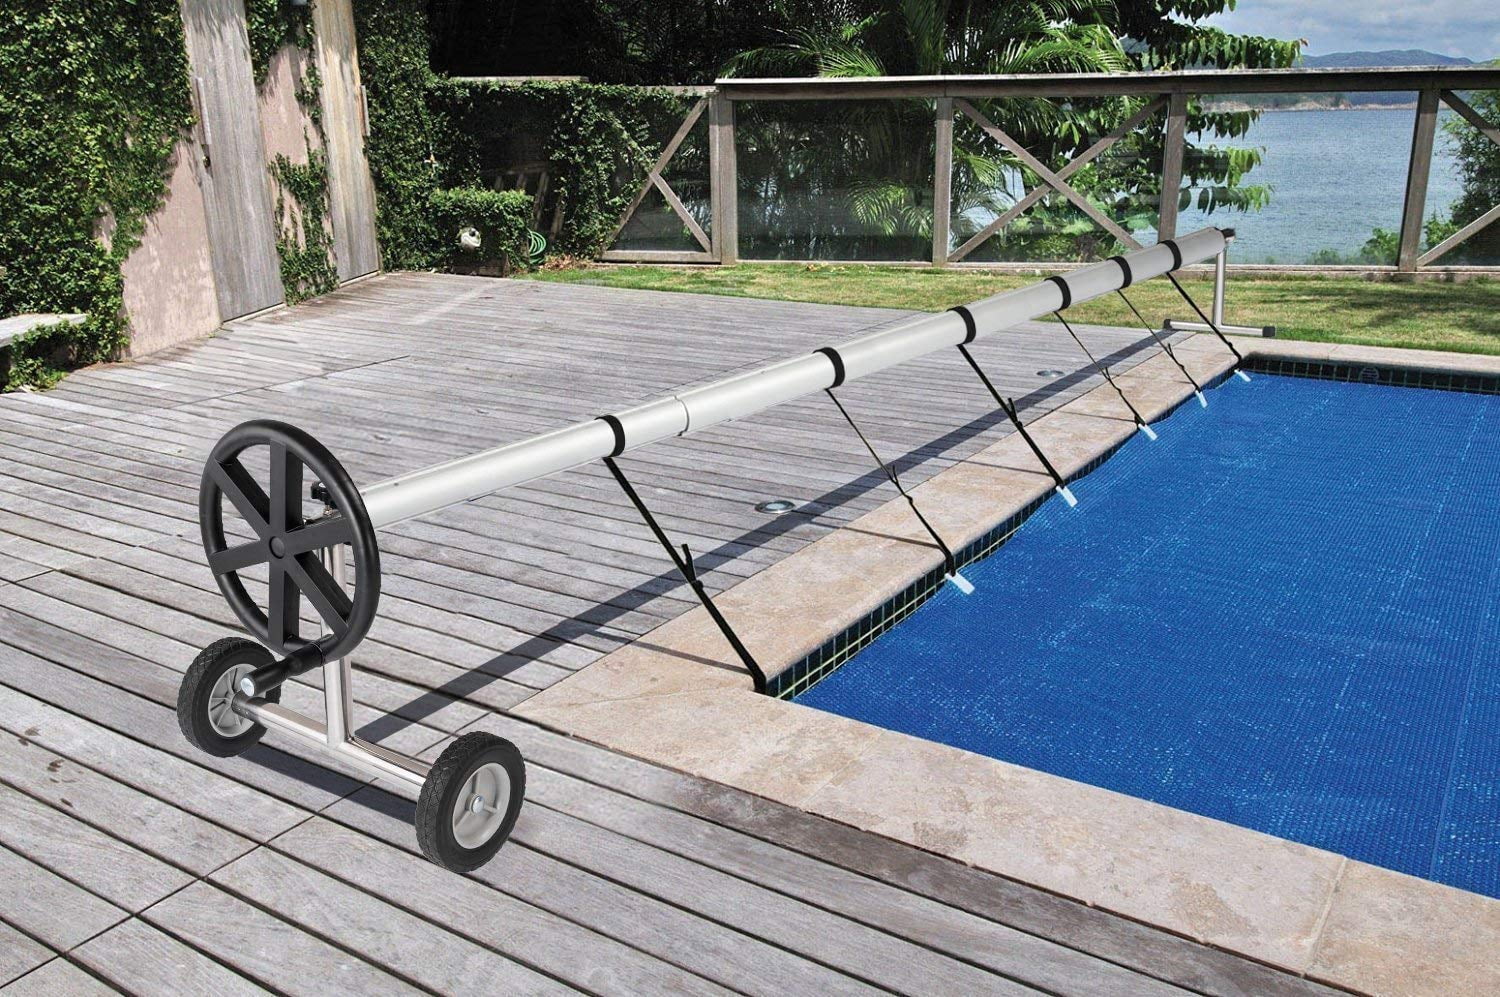 VINGLI Aluminum Solar Swimming Inground Pool Cover Reel Set, Up to